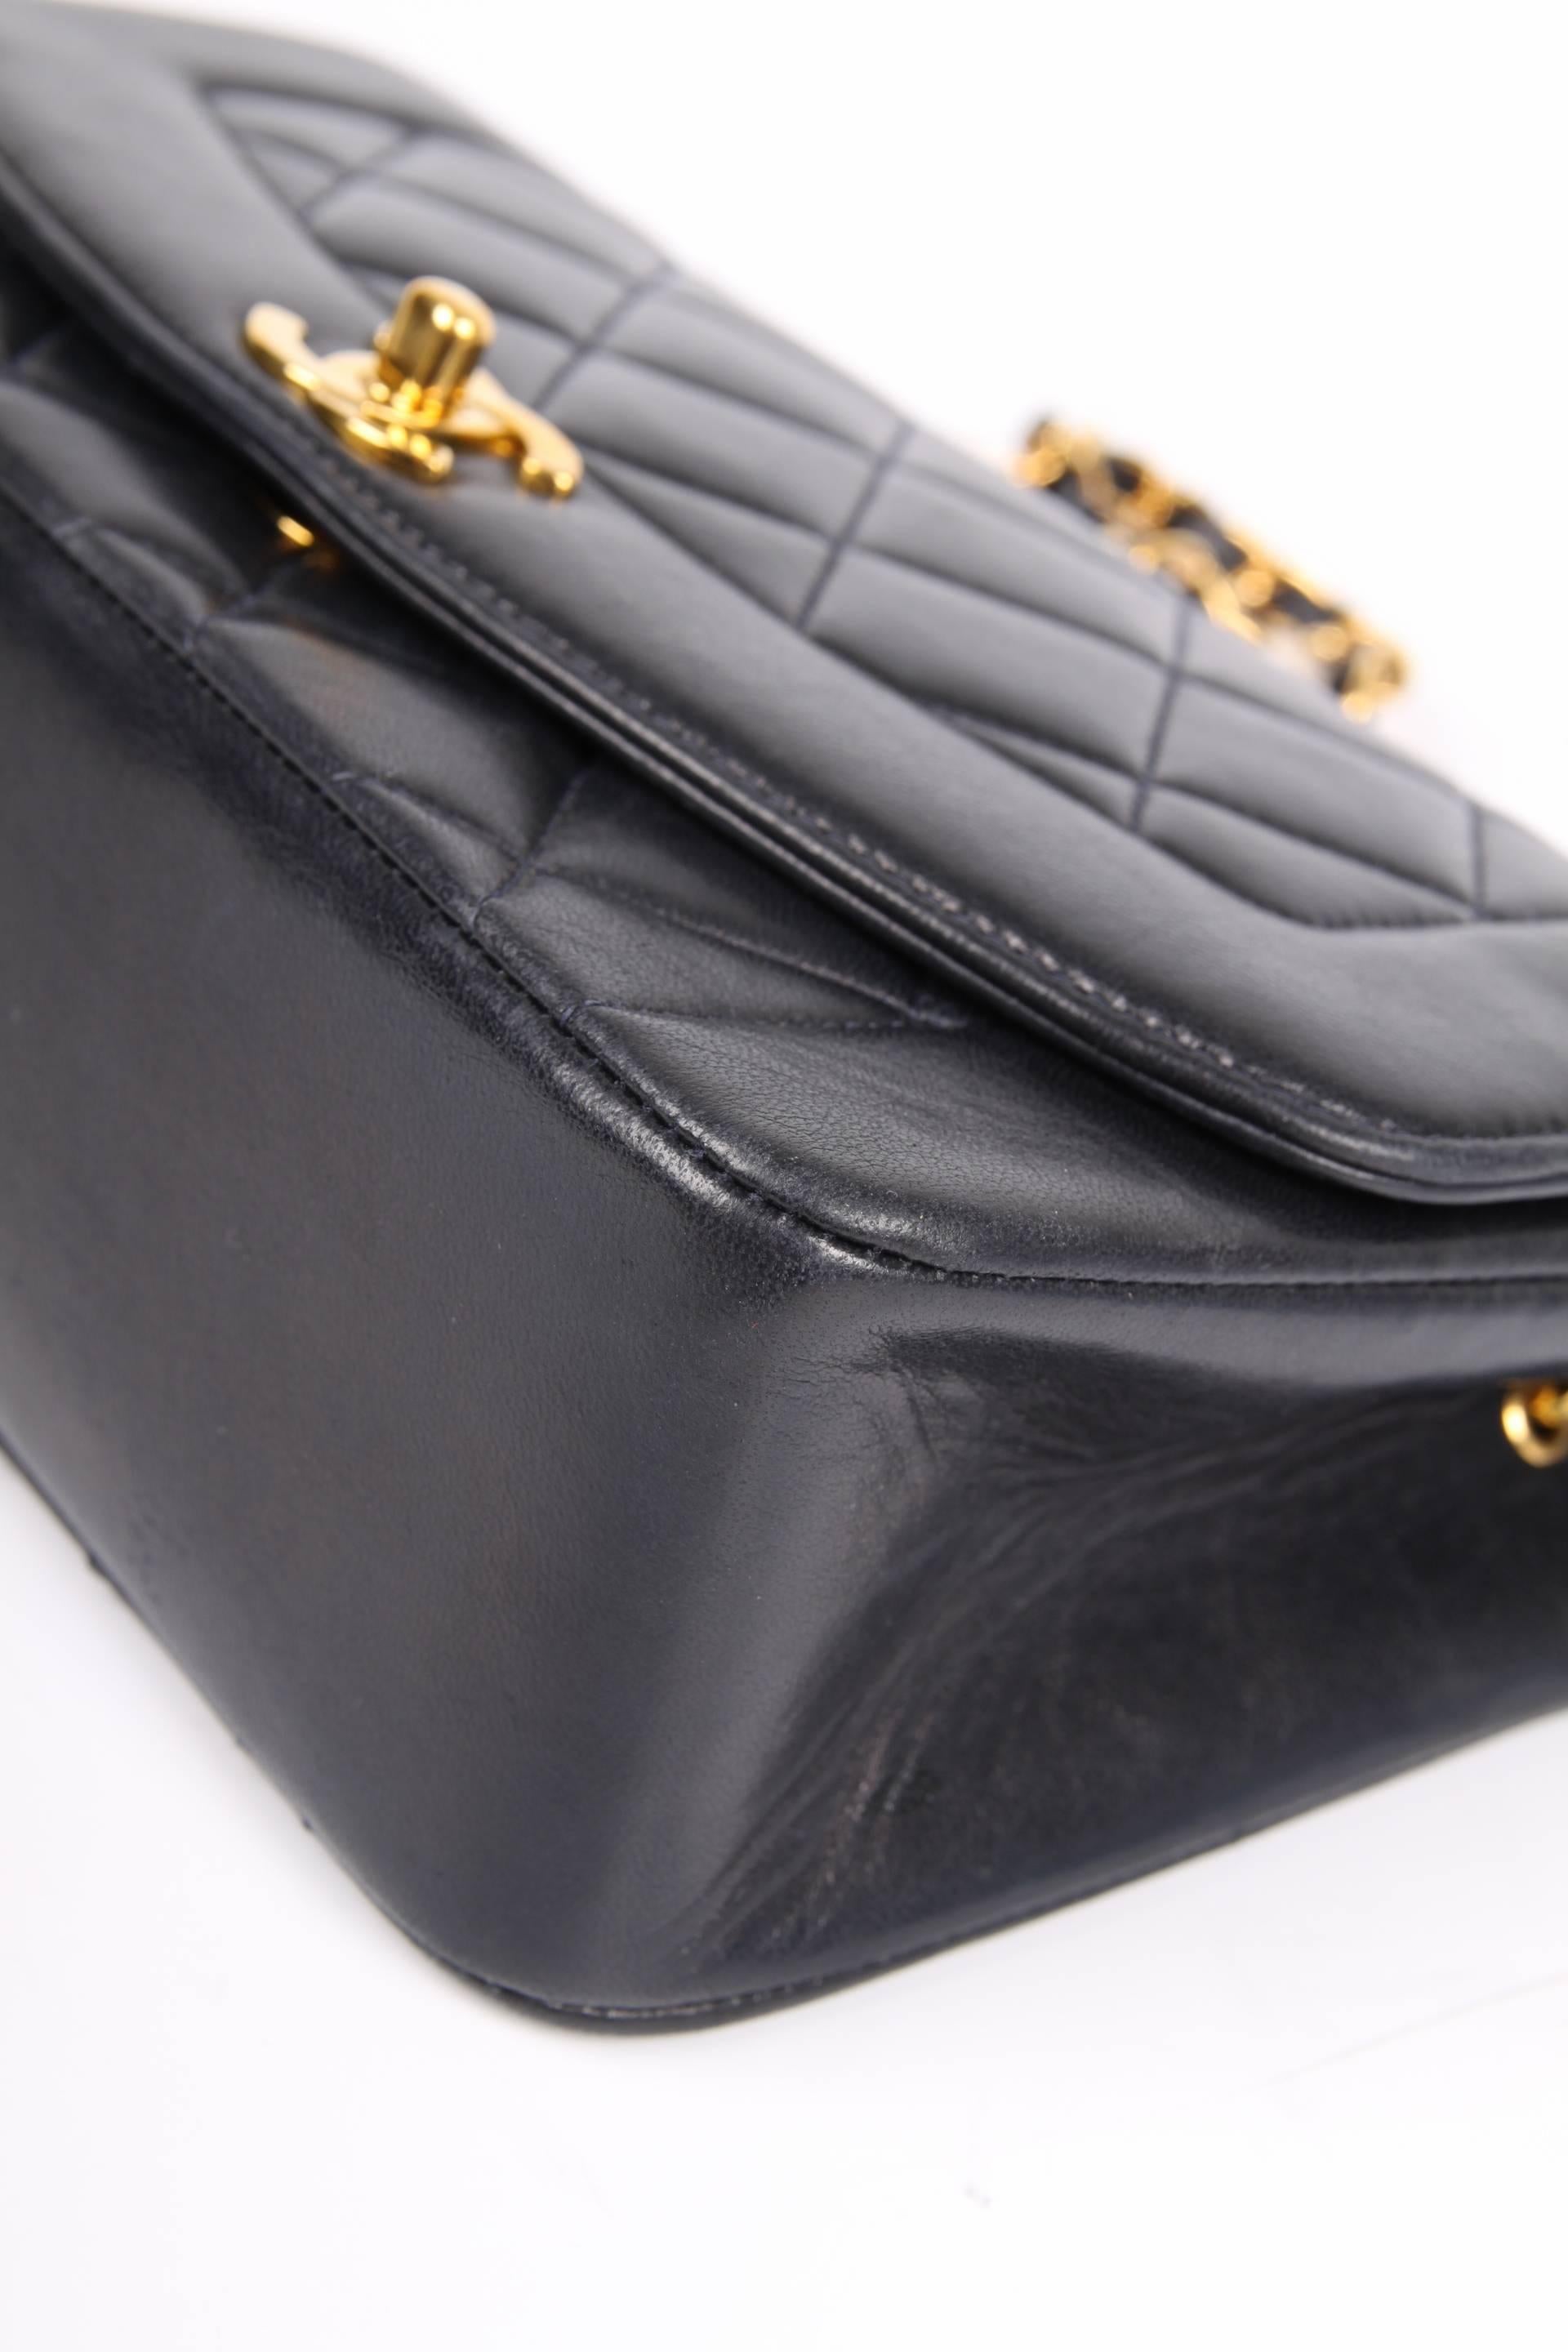 Chanel Vintage Diana Single Flap Bag - dark blue leather 1995 3